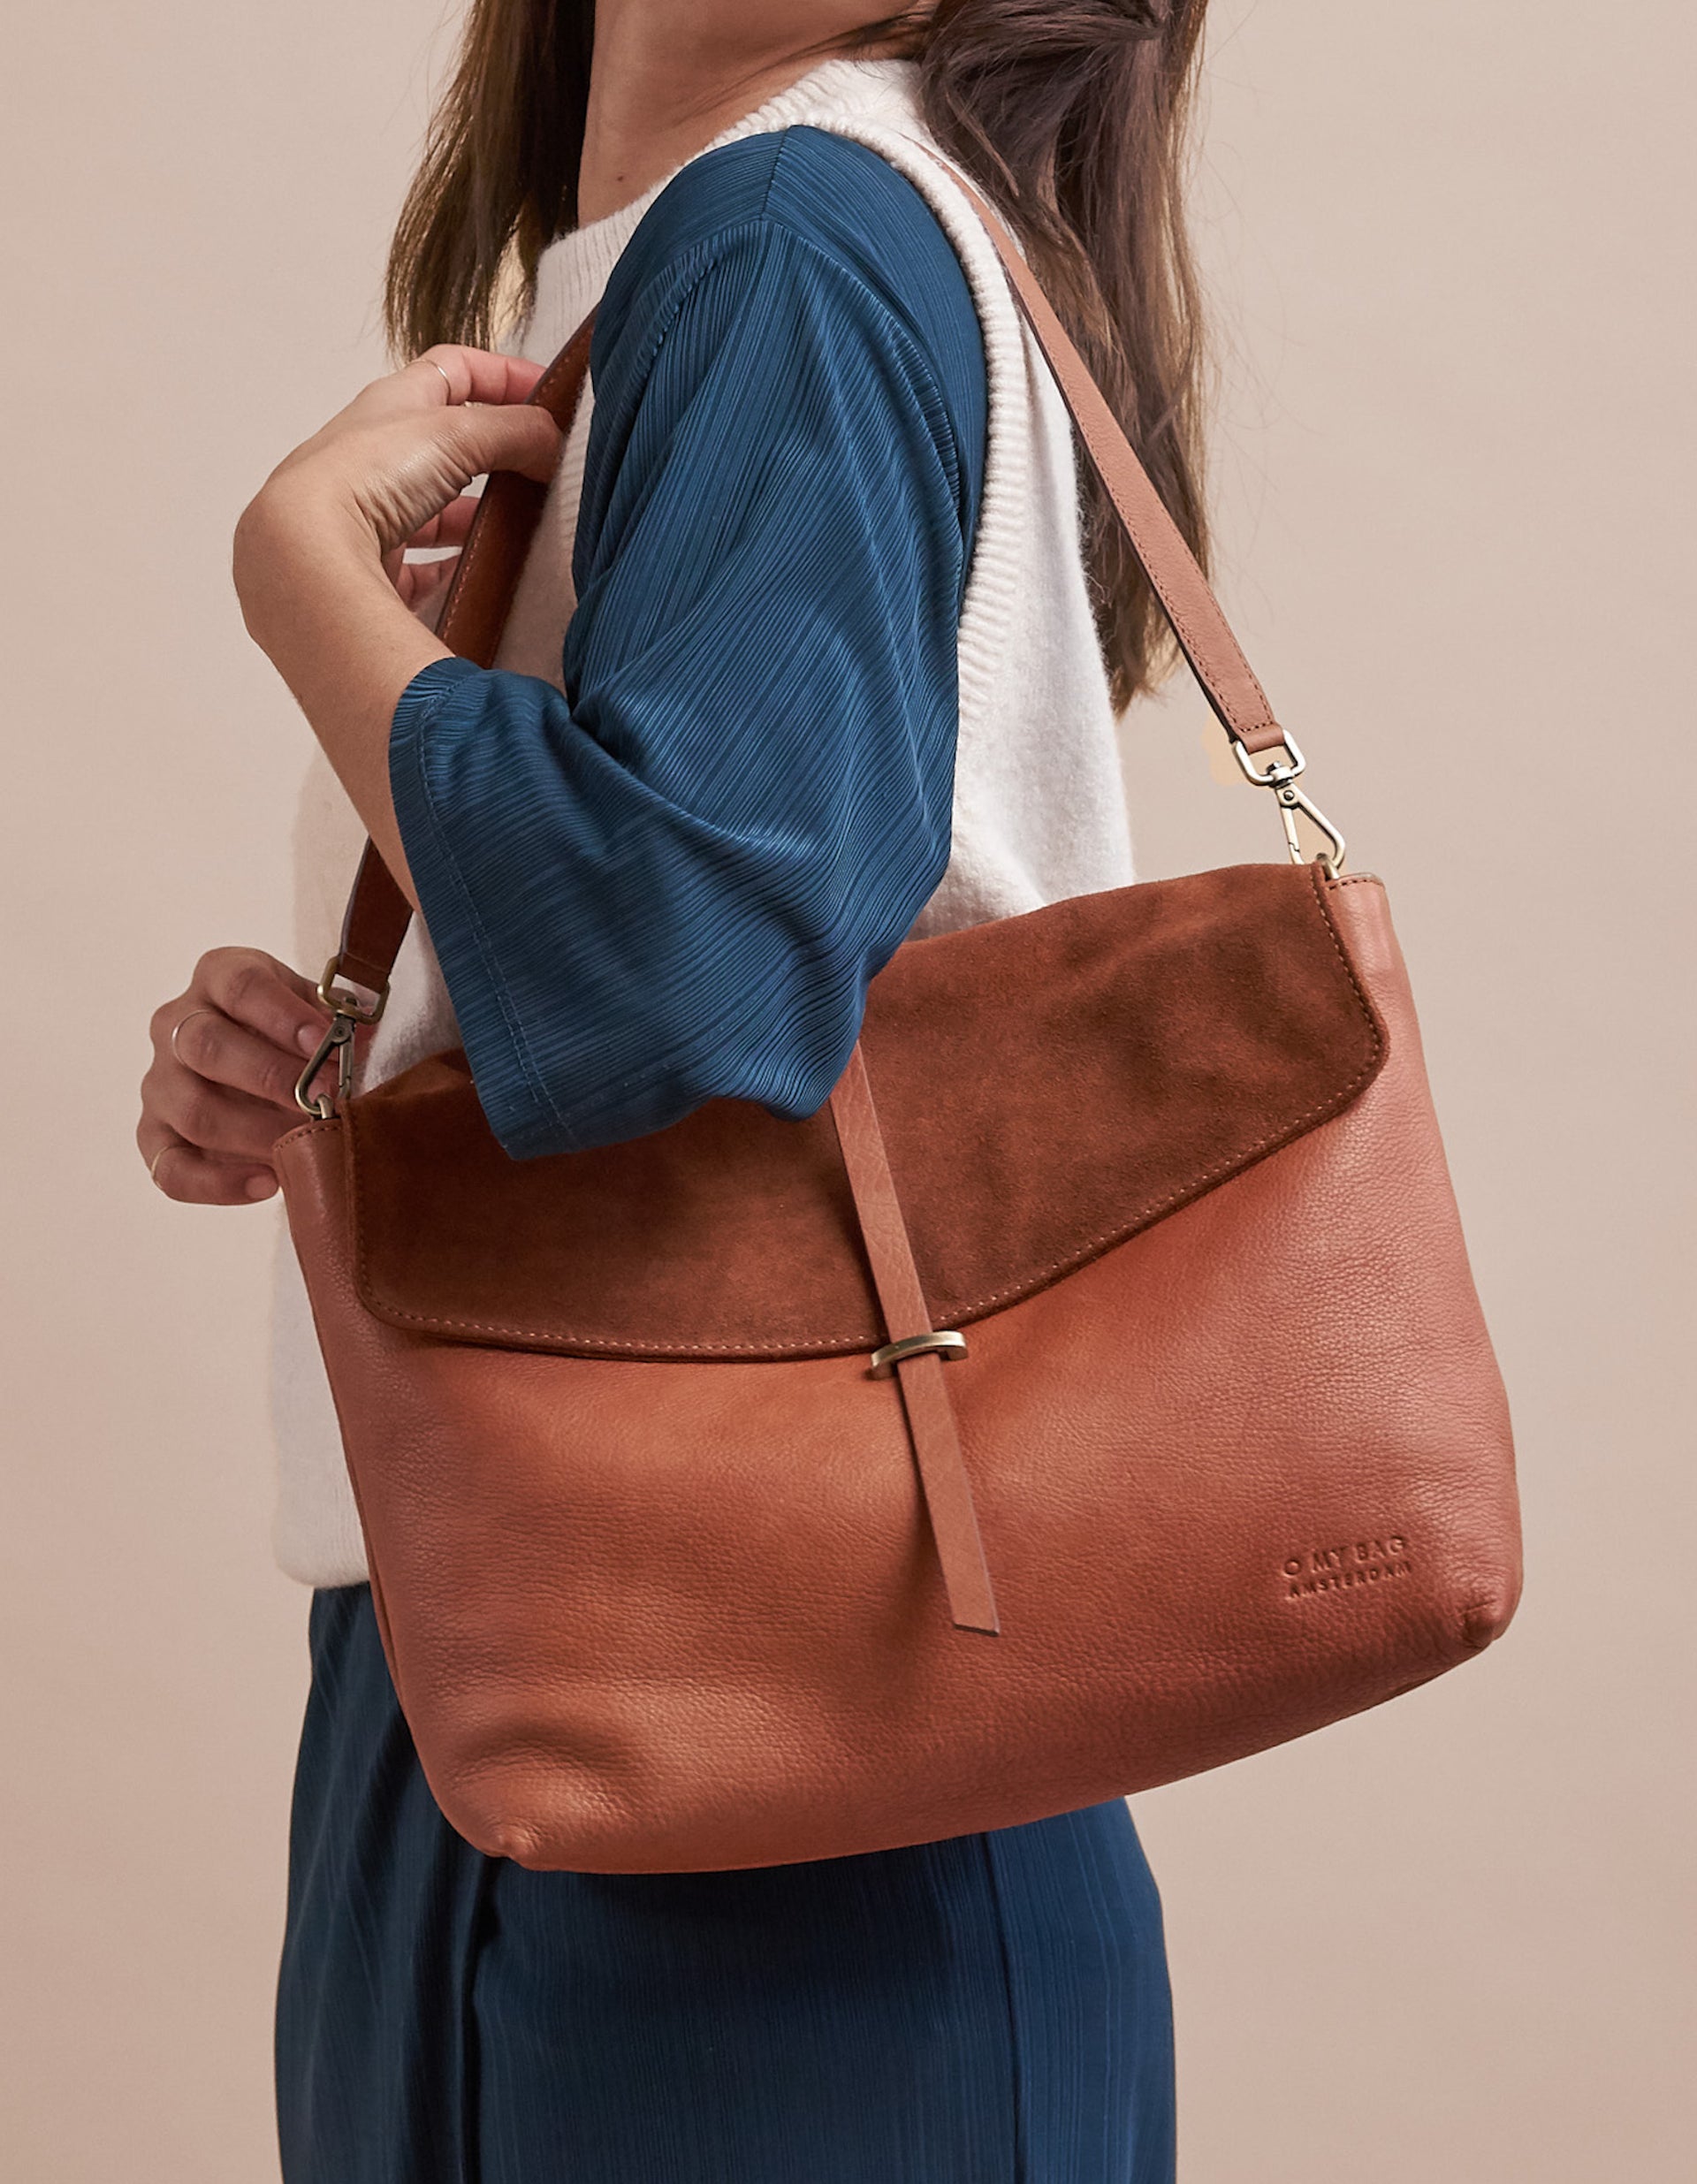 Wild Oak Soft Grain & Suede leather womens handbag. Square shape with short adjustable strap. Model product image.